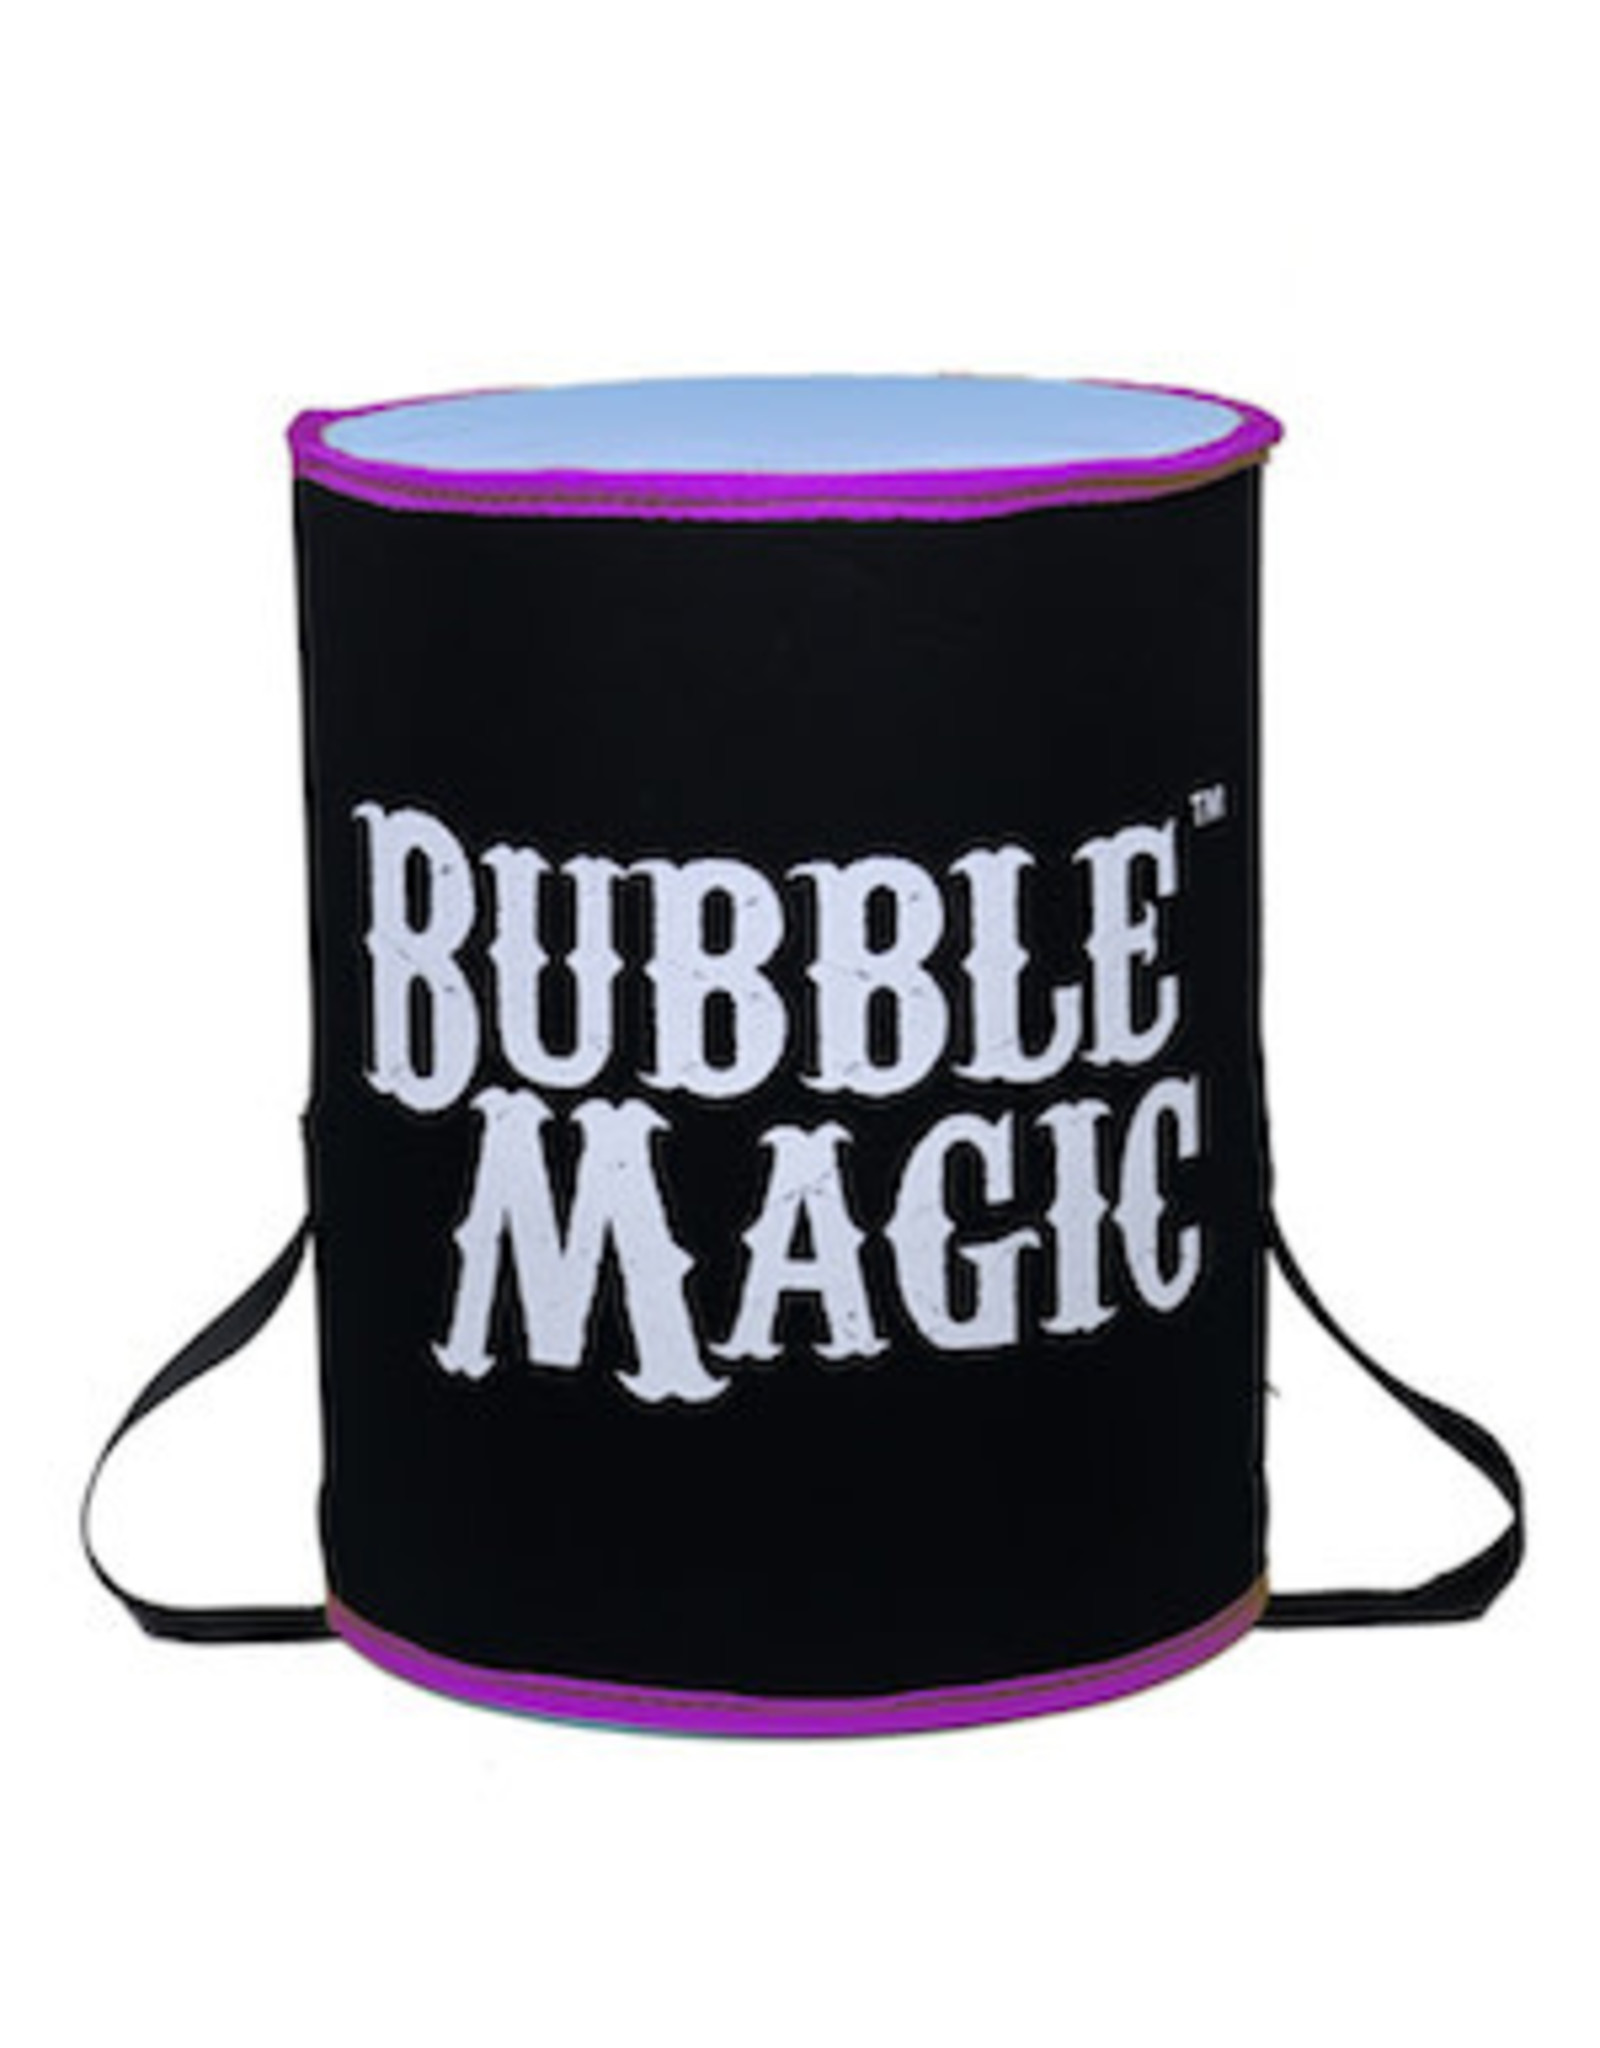 Bubble Magic Bubble Magic Extraction Shaker Bag 73 Micron